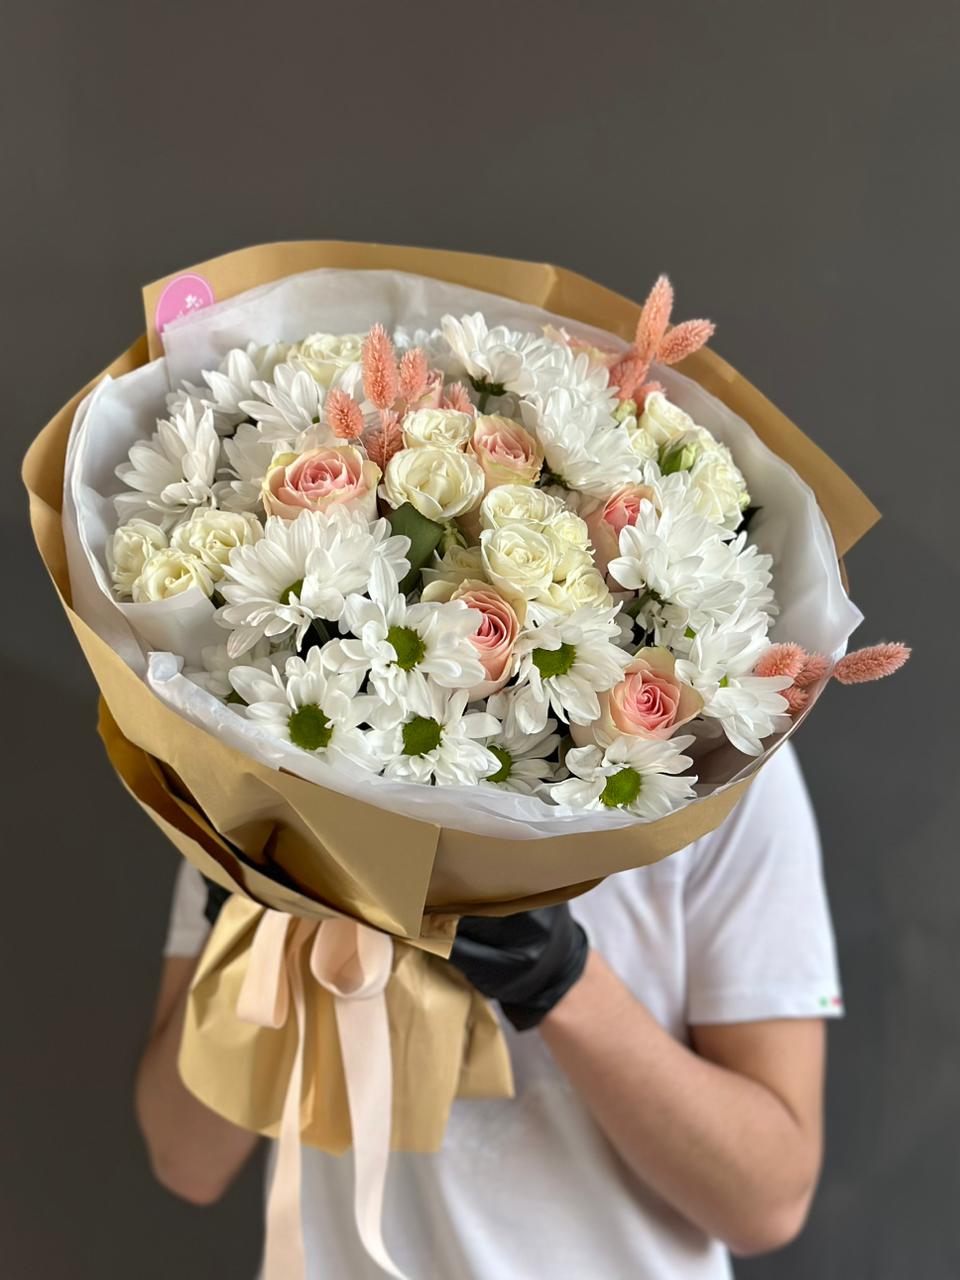 Композиция "Раймонд" из хризантем, роз и сухоцветов